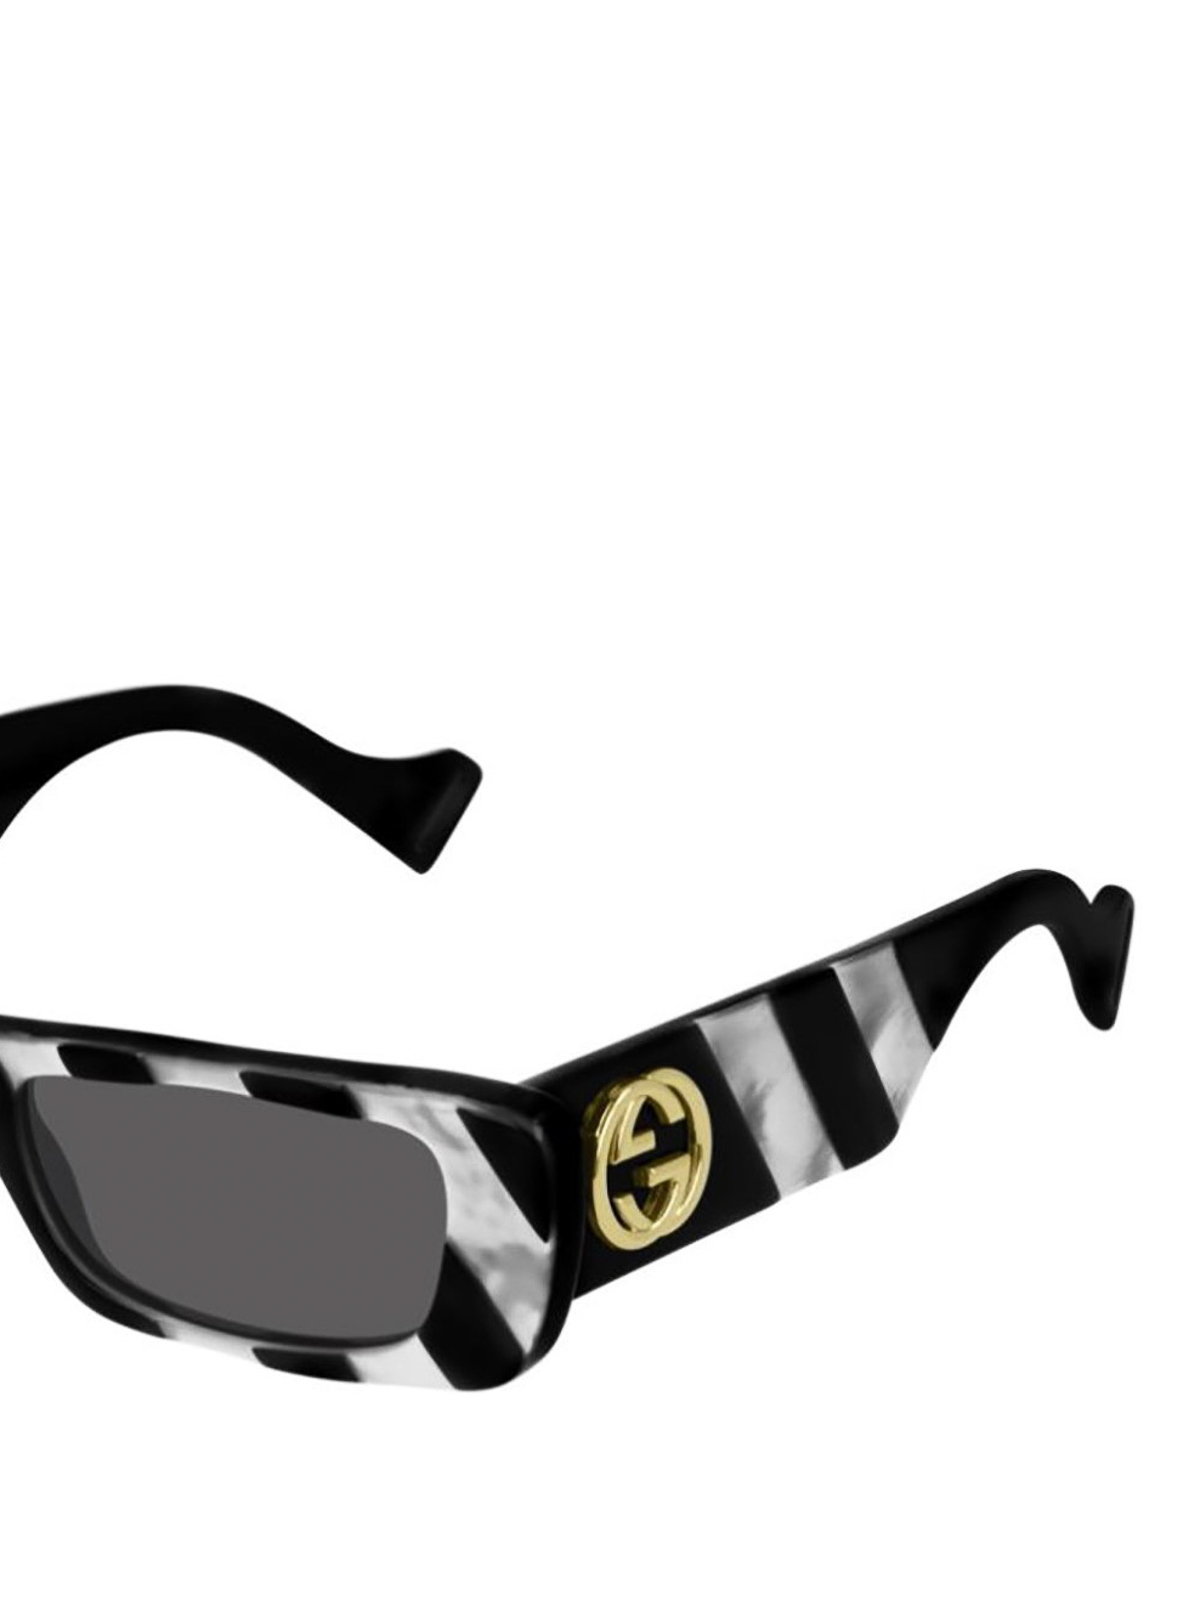 Gucci - Striped patterned sunglasses 